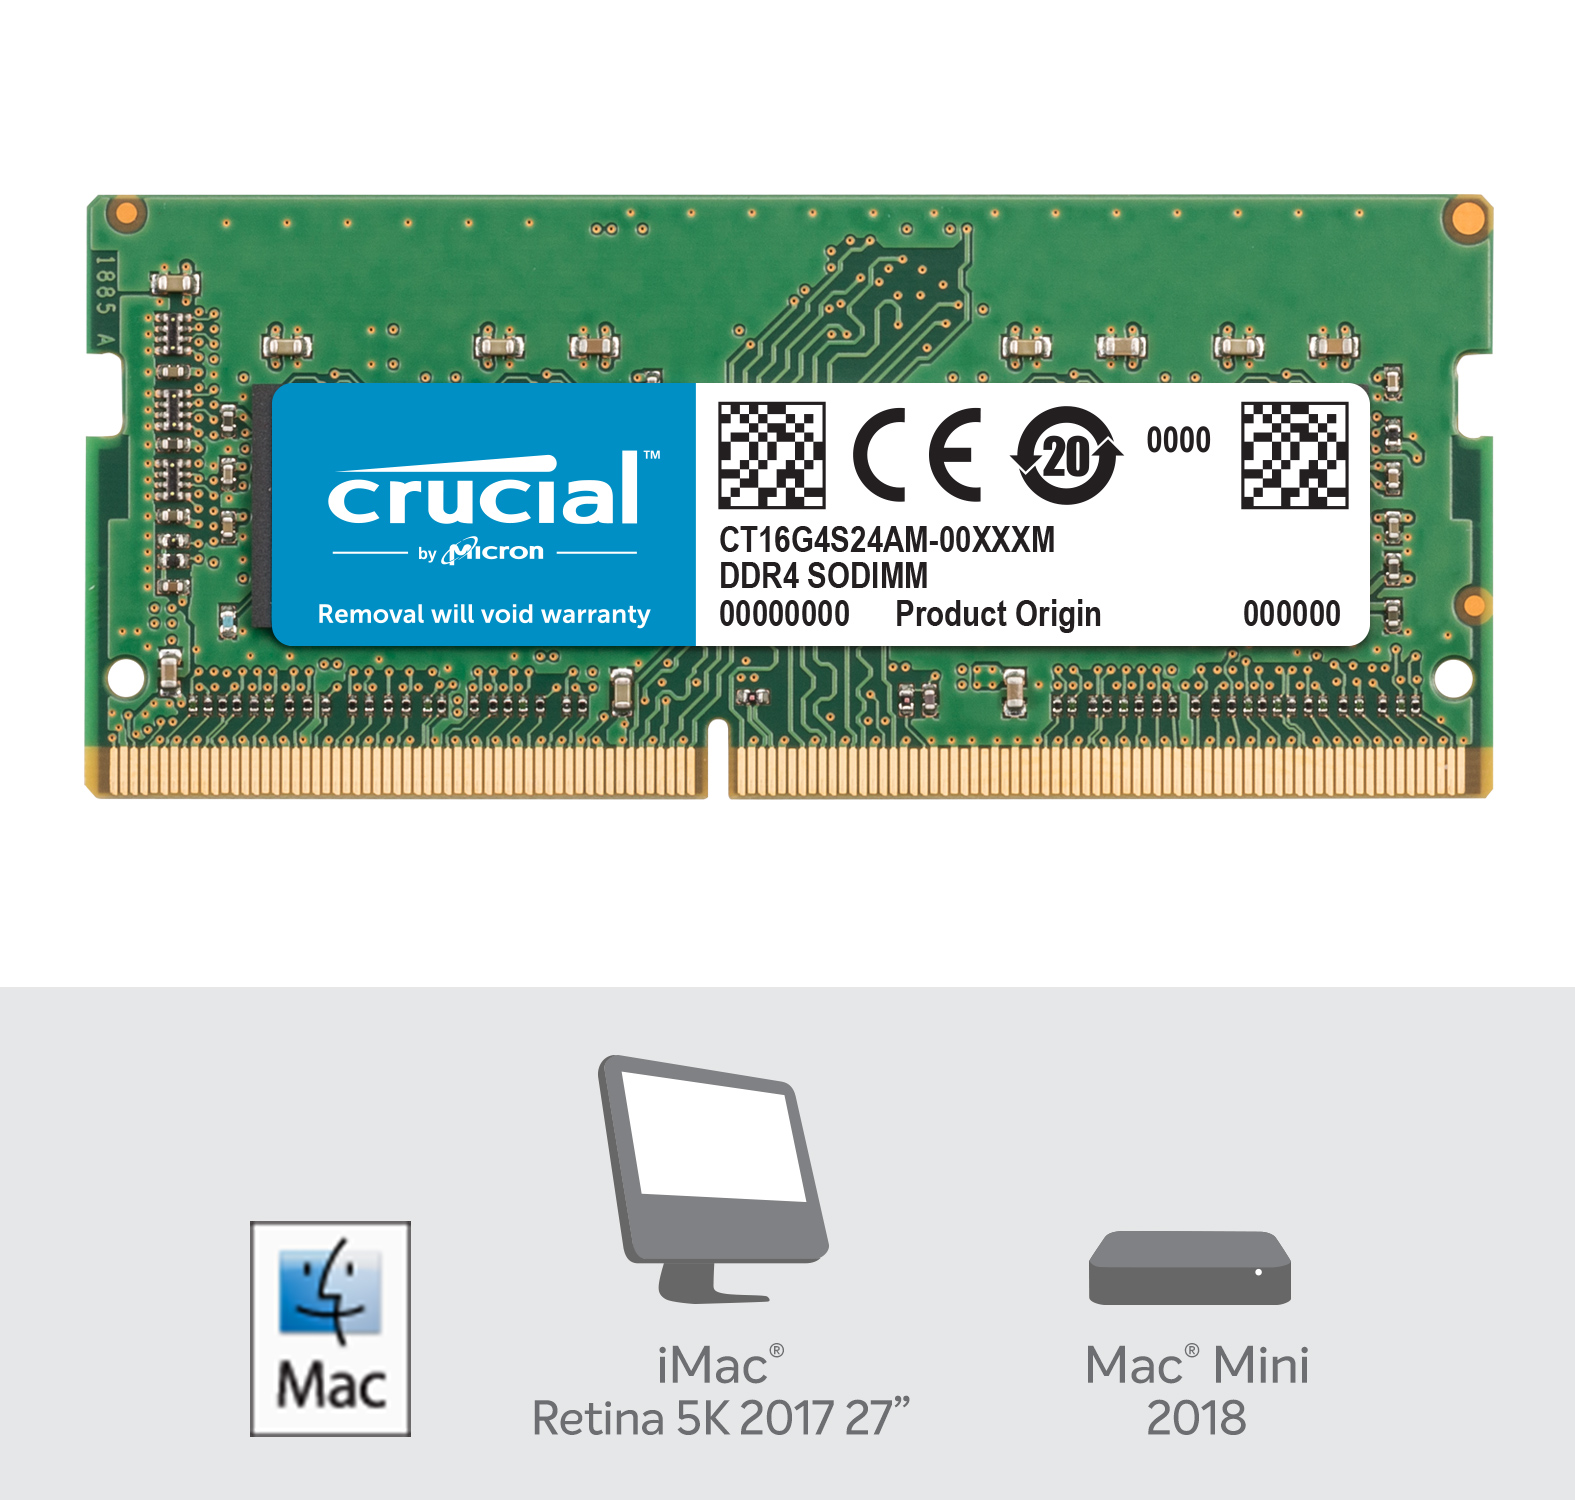 Crucial SO-DIMM DDR4 2400MHz 16GB (CT16G4SFD824A) - Hitta bästa pris på  Prisjakt